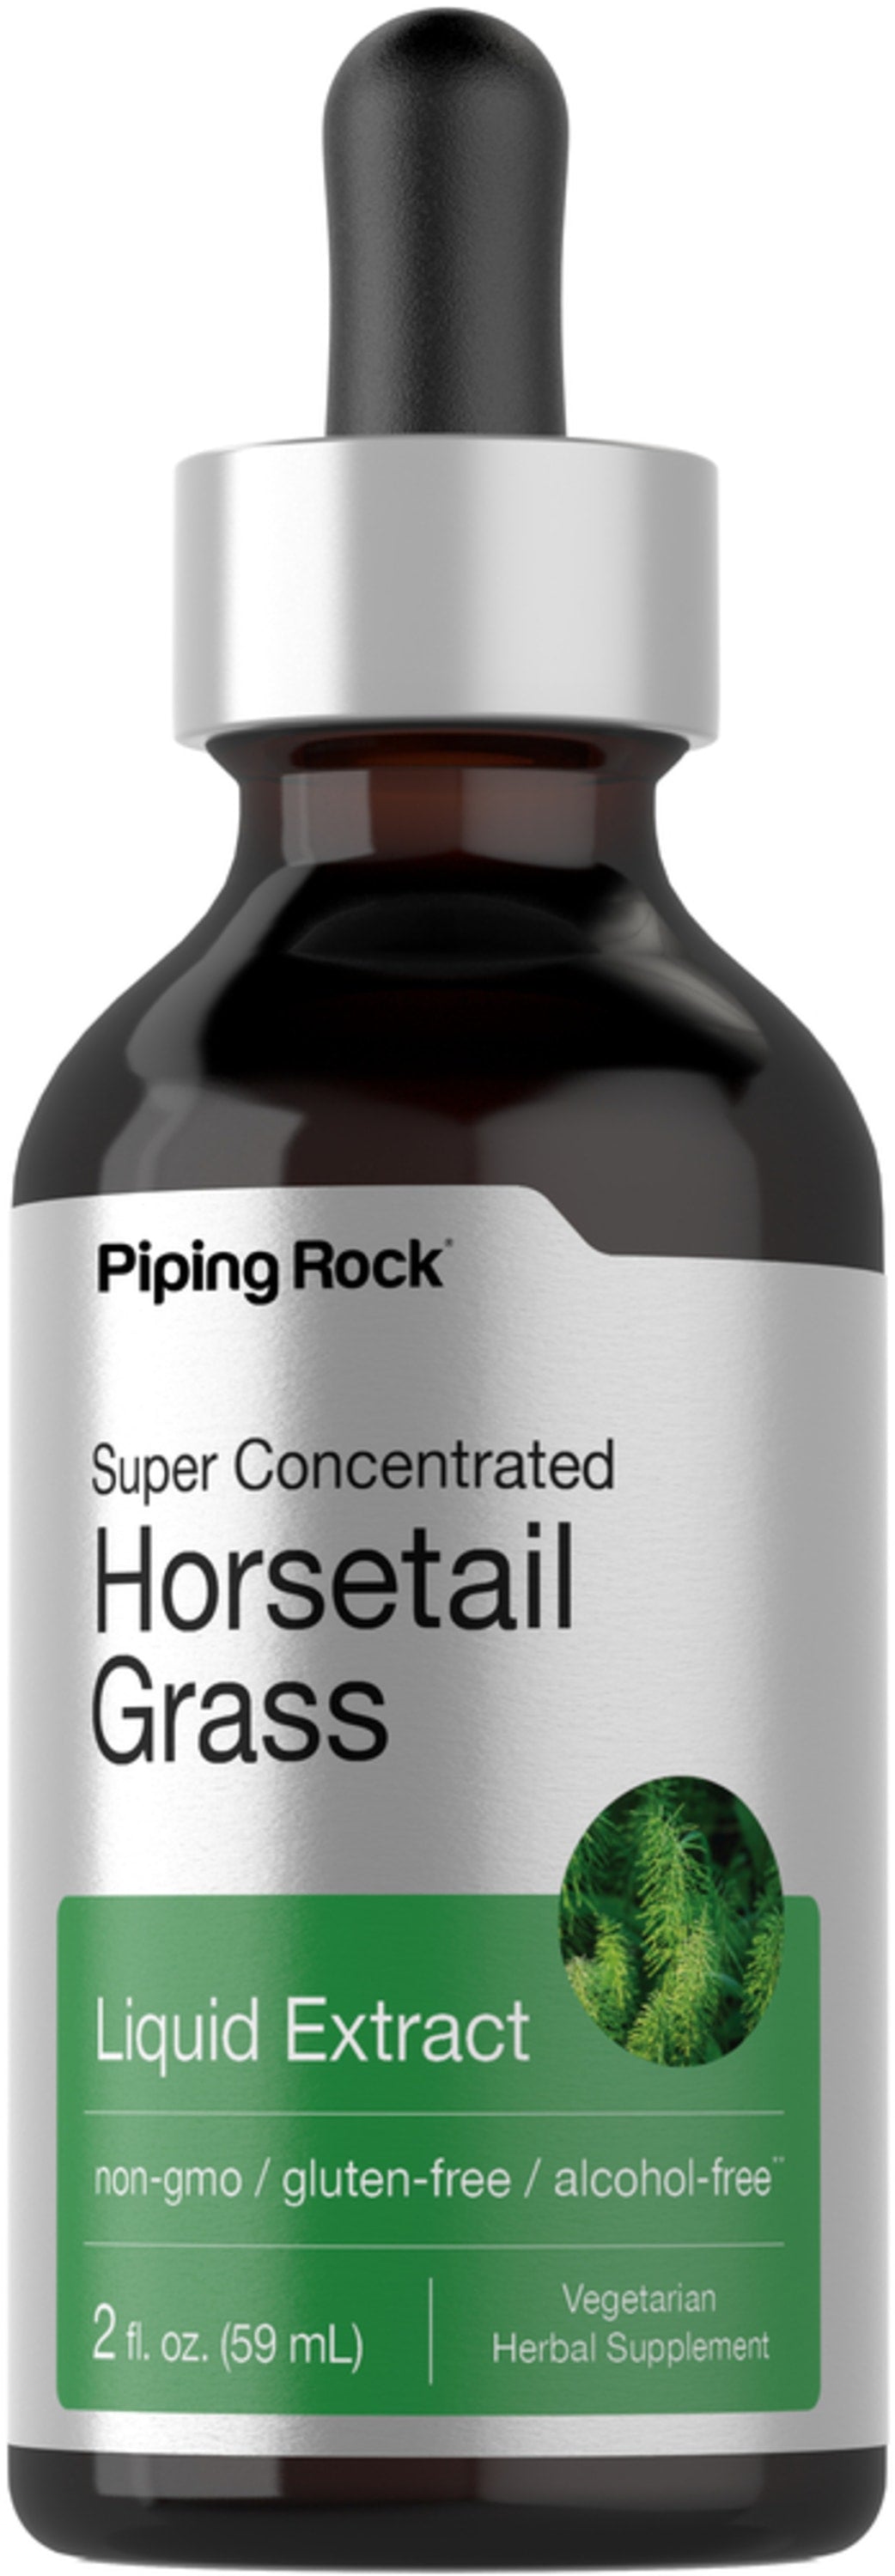 Horsetail Liquid Extract Alcohol Free, 2 fl oz (59 mL) Dropper Bottle